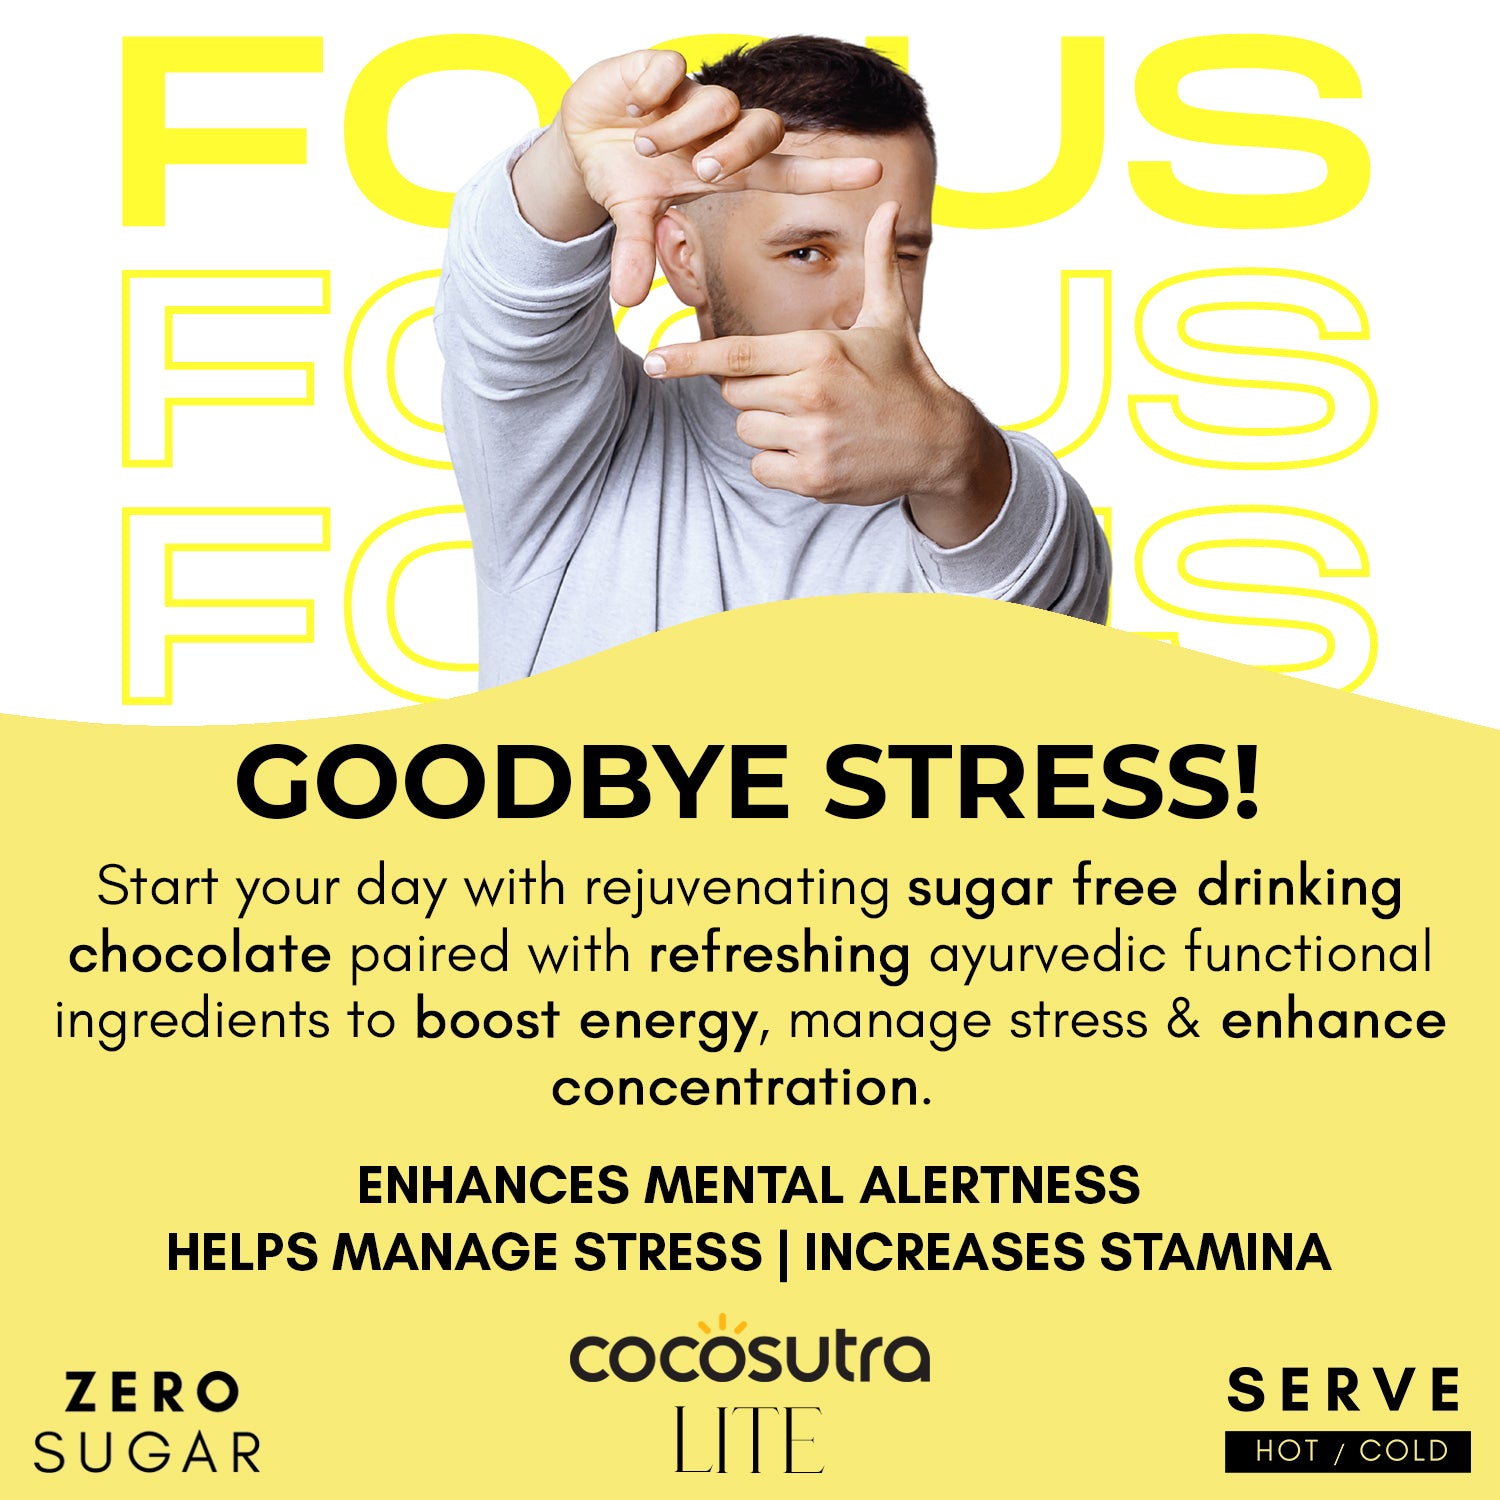 Relax & Focus | Sugar Free Drinking Chocolate Sachet Hamper